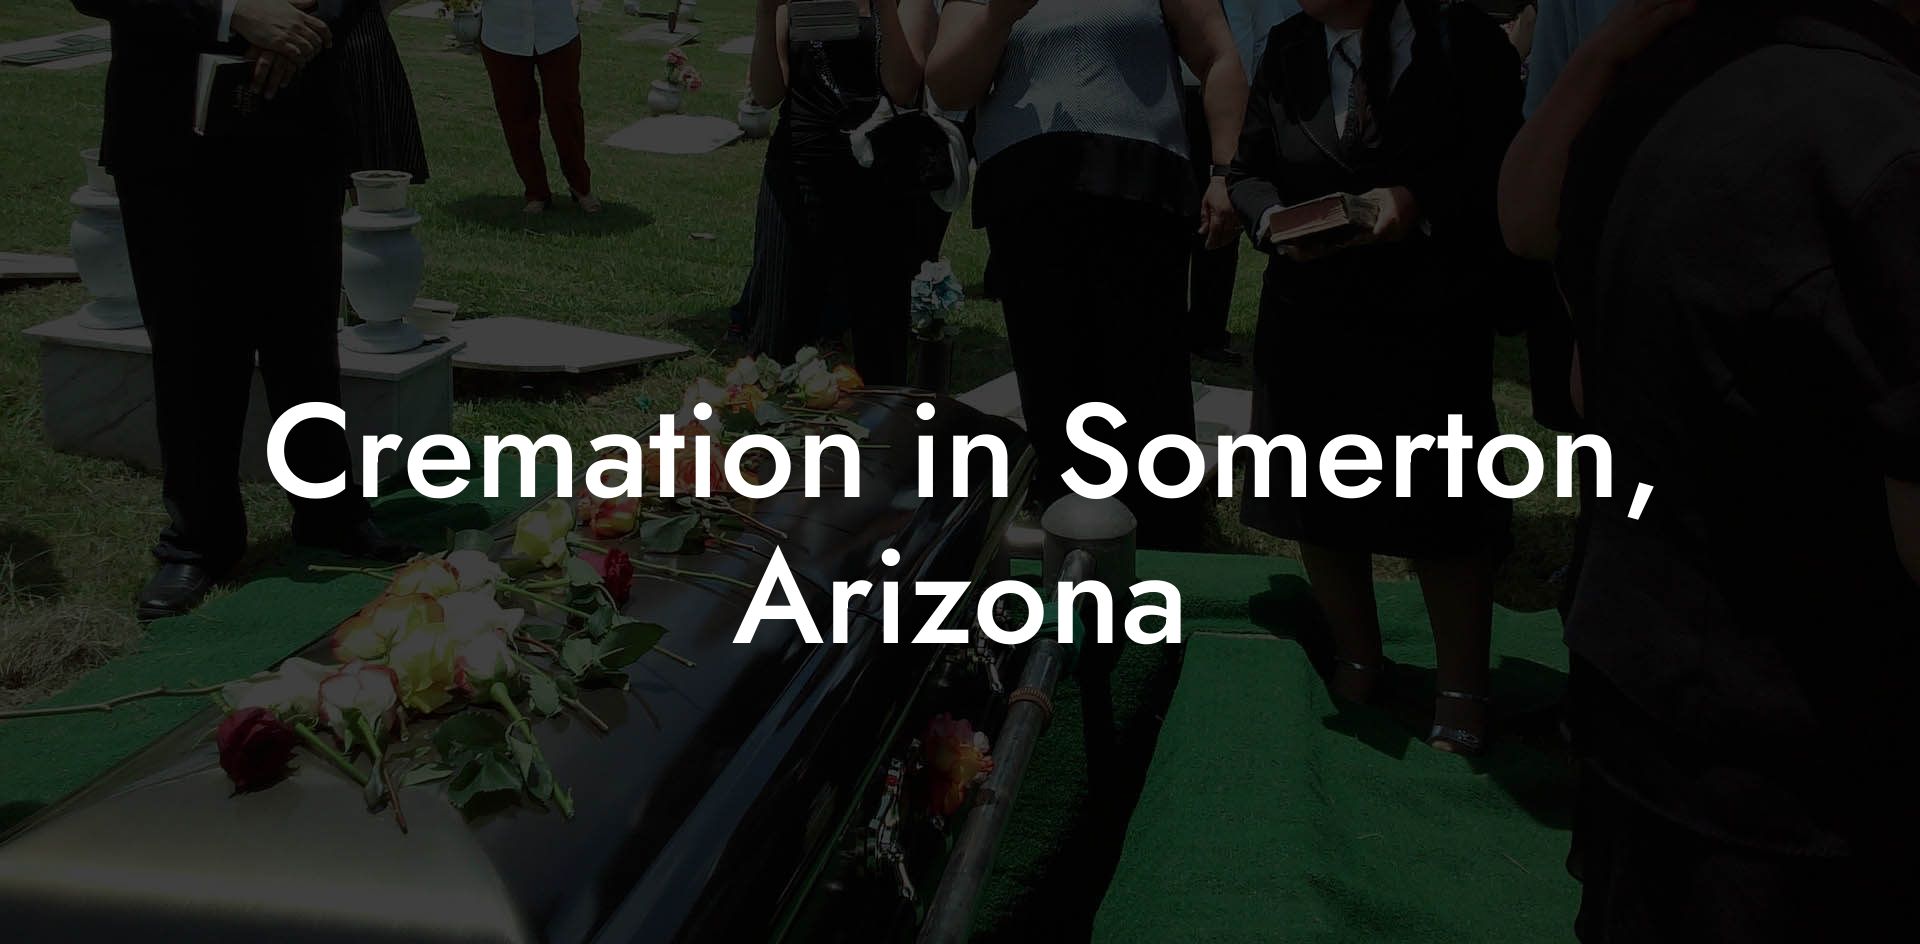 Cremation in Somerton, Arizona